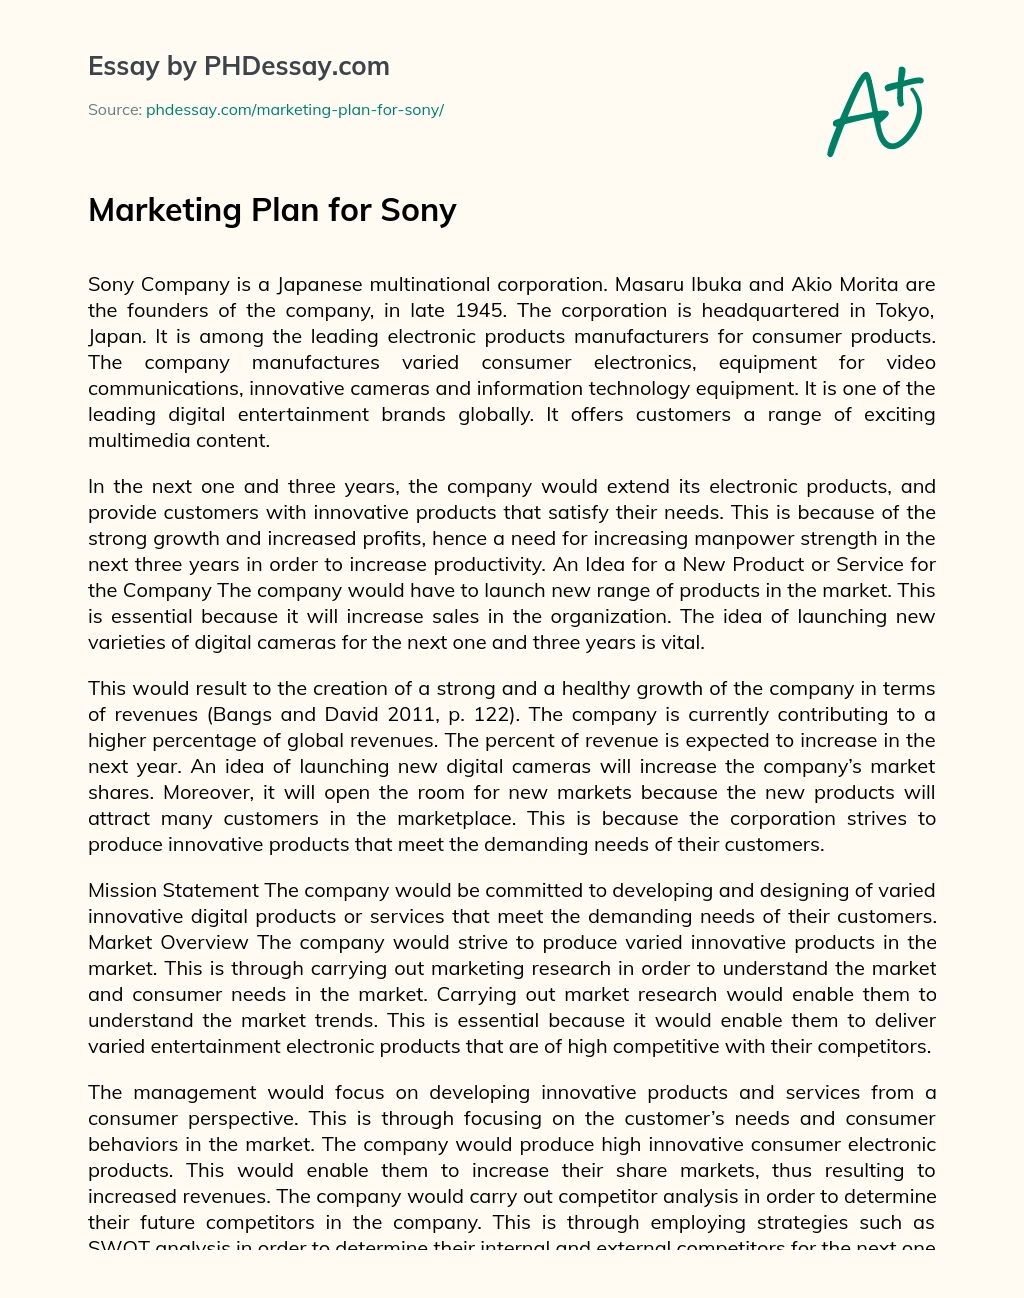 Marketing Plan for Sony essay